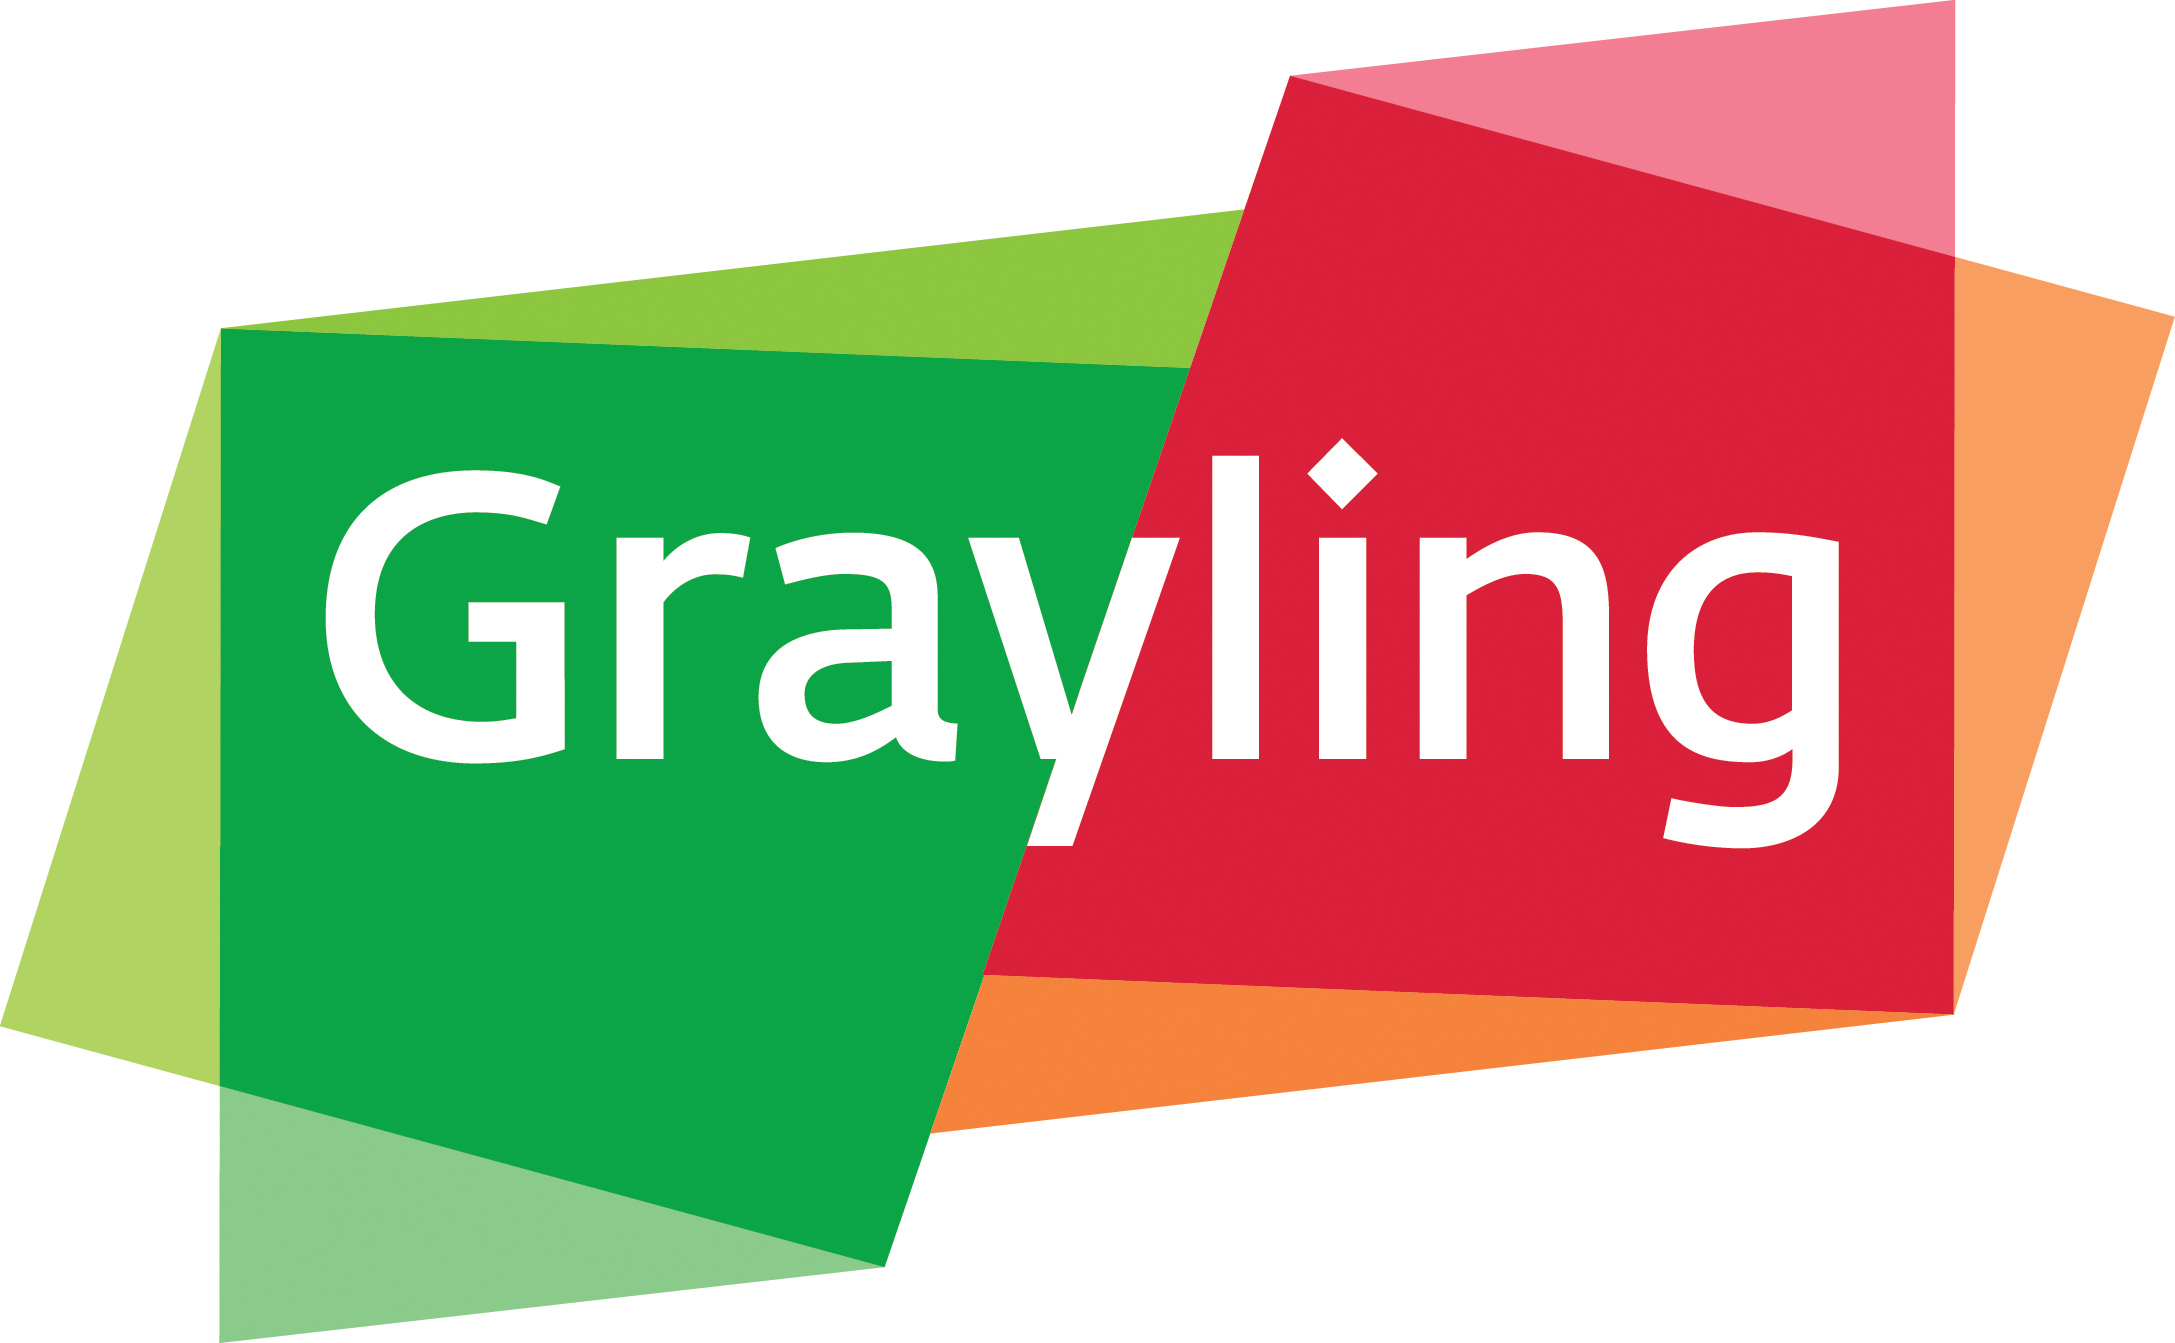  Top Public Relations Agency Logo: Grayling